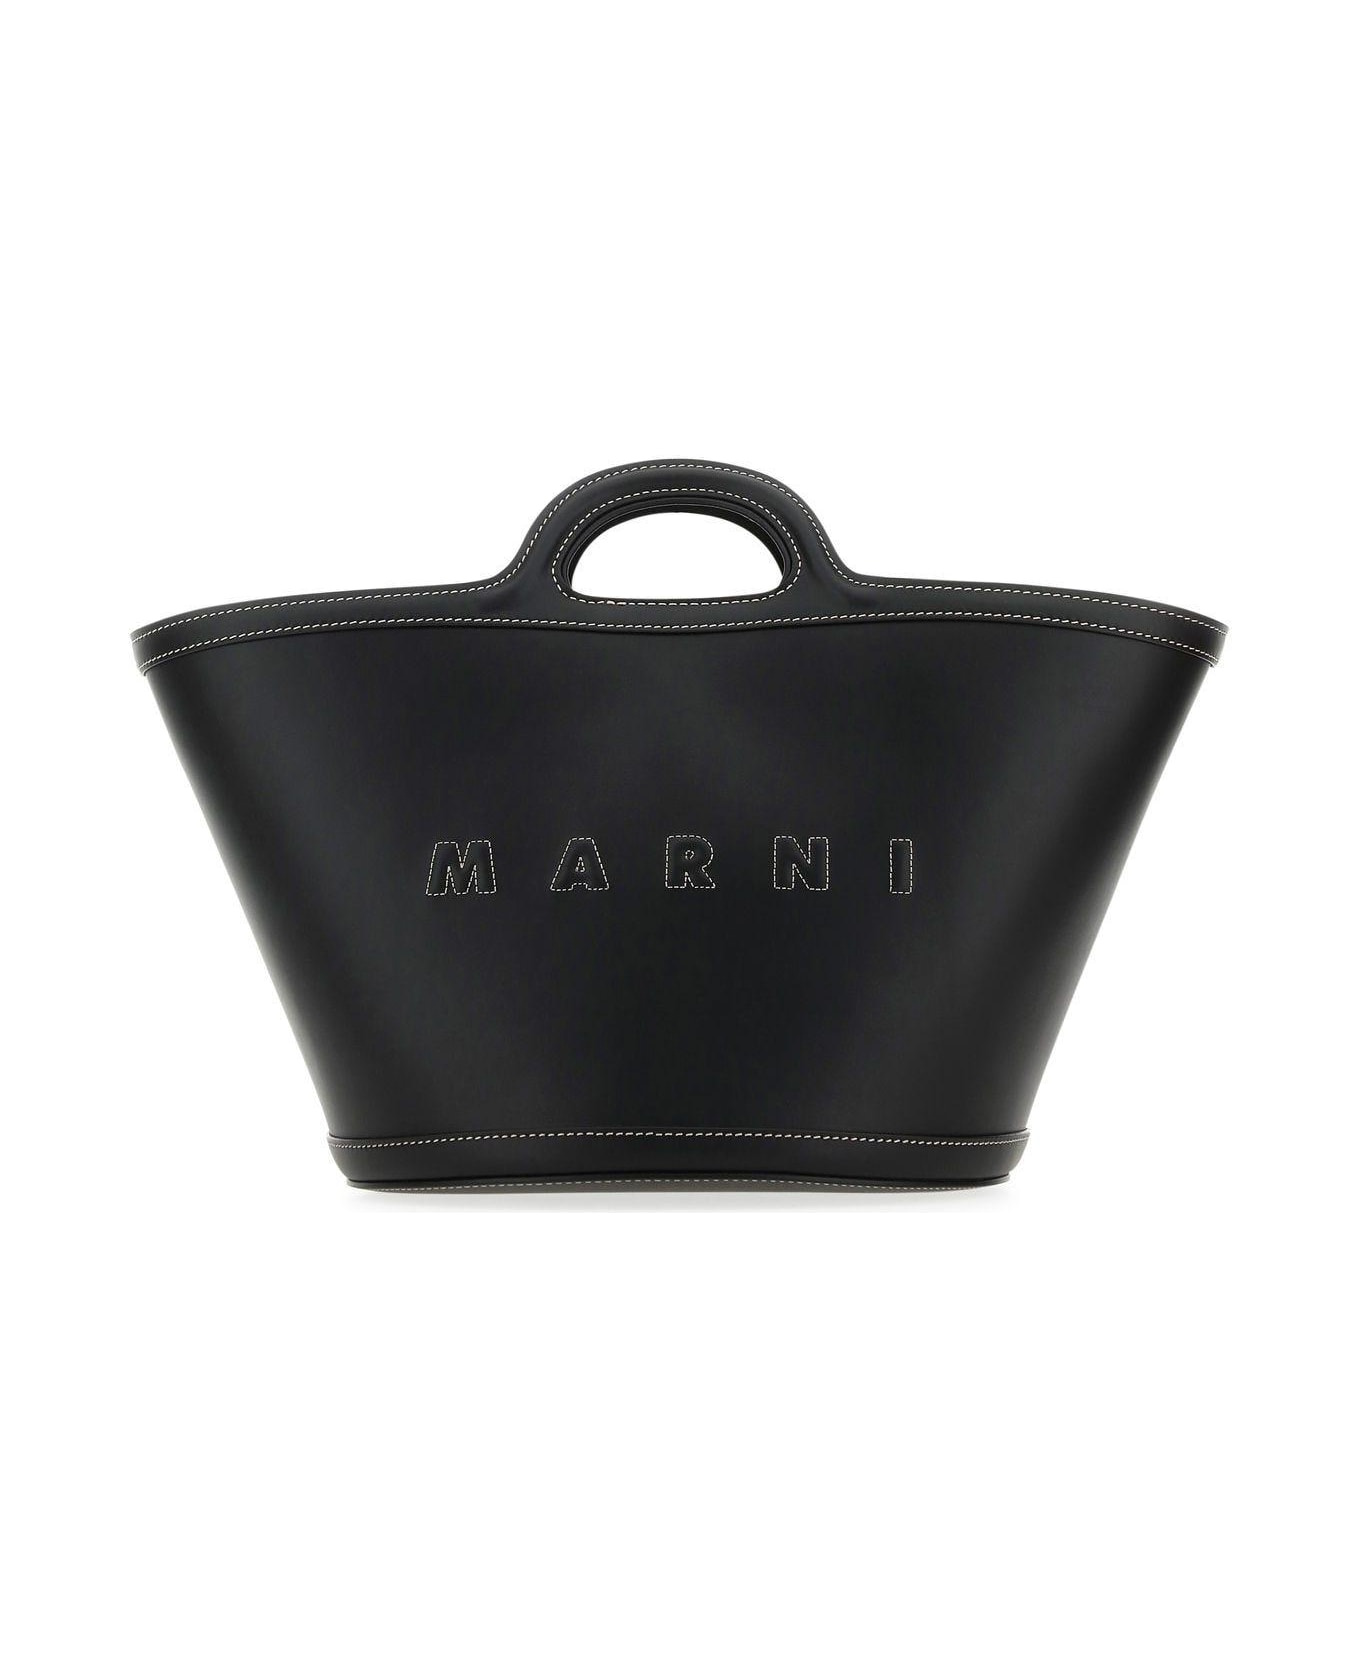 Marni Black Leather Small Tropicalia Handbag - BLACK